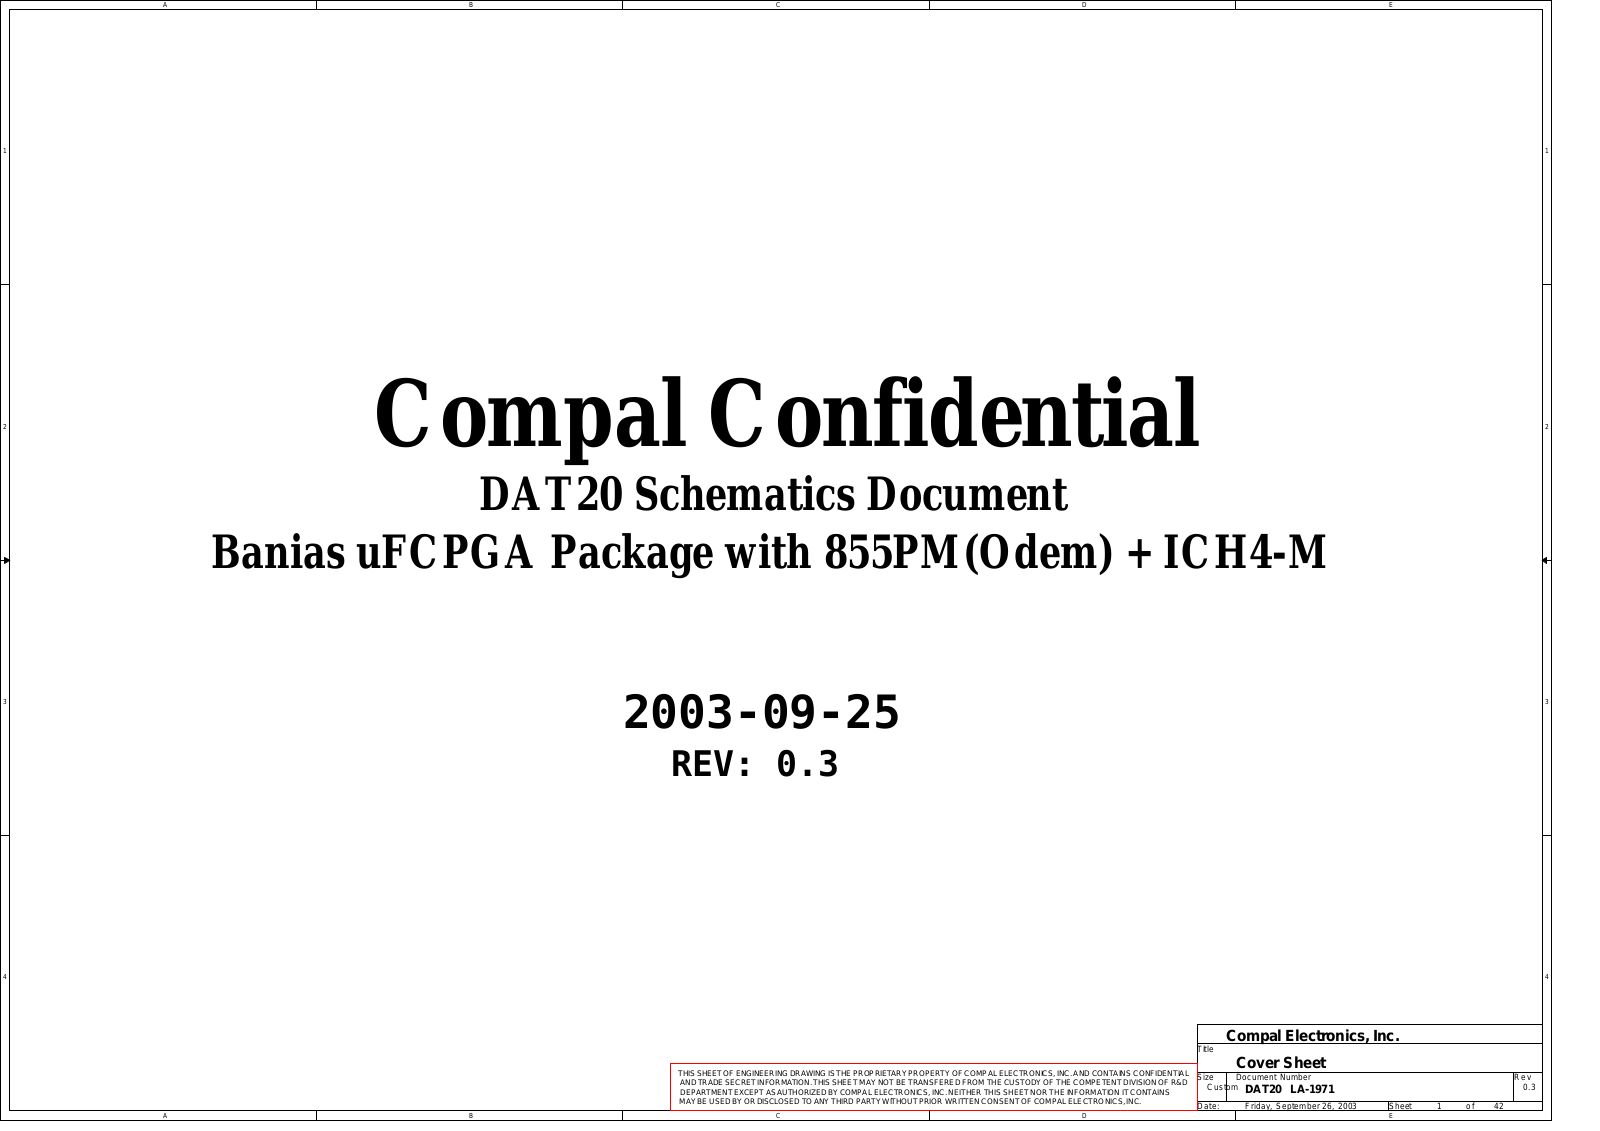 Compal LA-1971 DAT20, A500G, A500, E600 Schematic